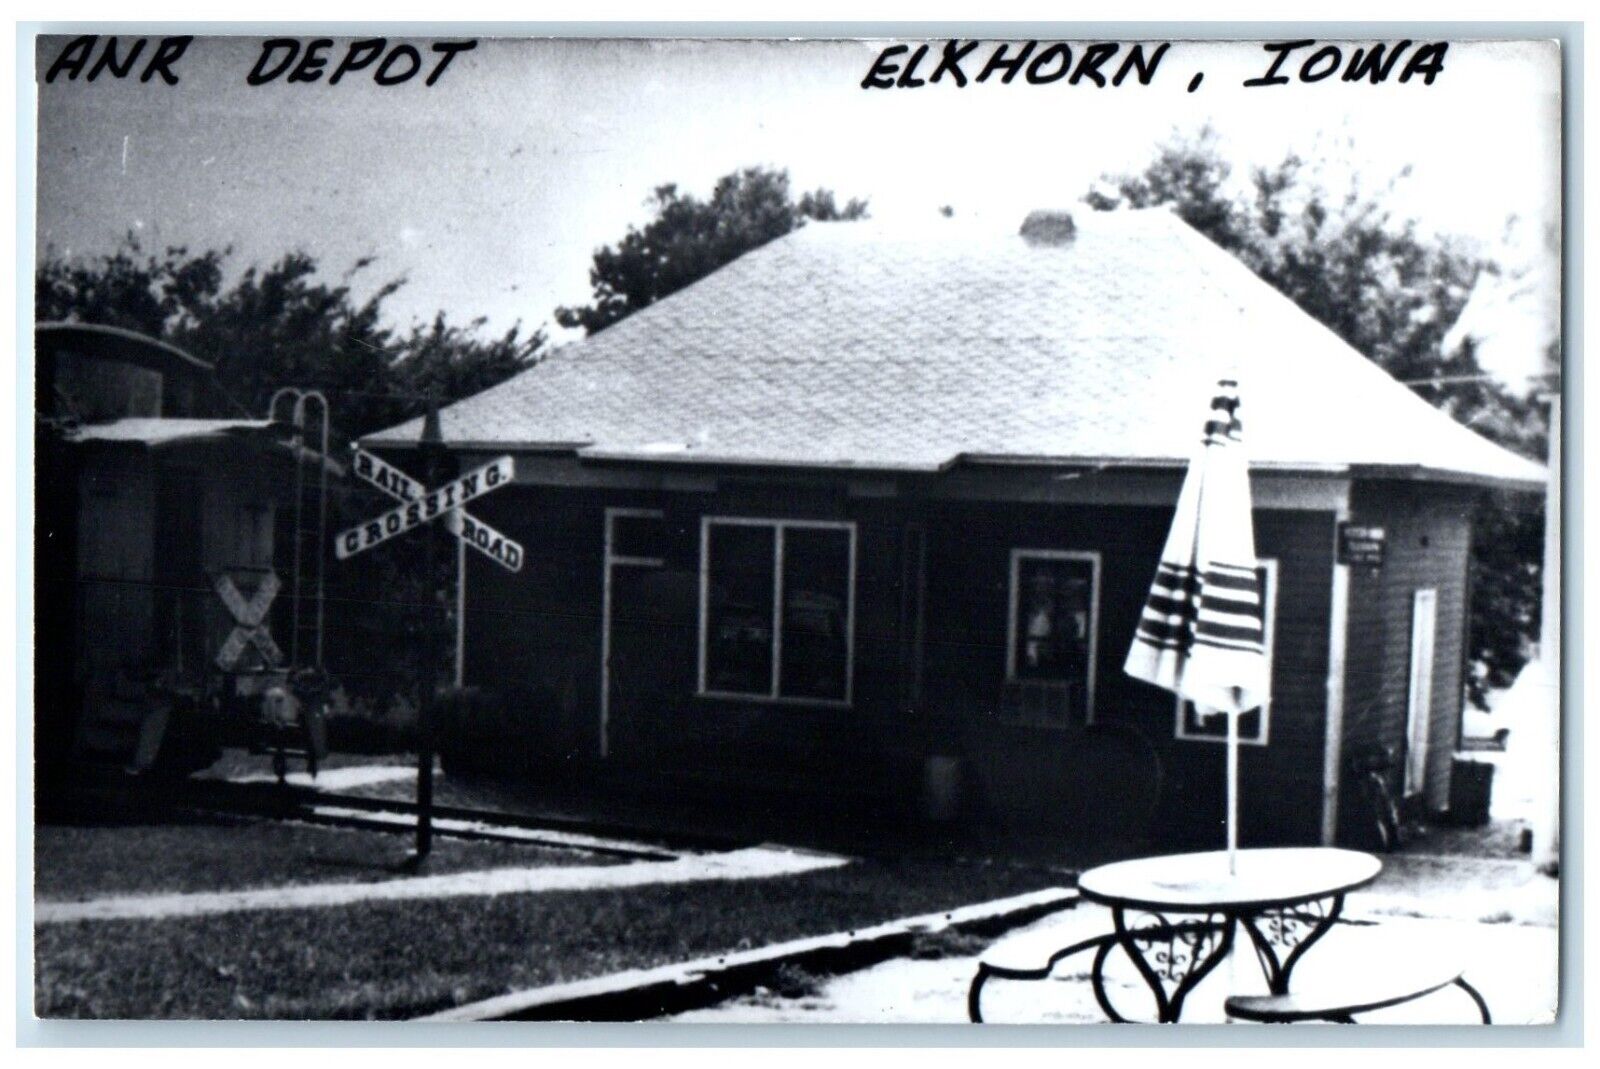 c1960's  ANR Depot Elkhorn Iowa Vintage Train Depot Station RPPC Photo Postcard